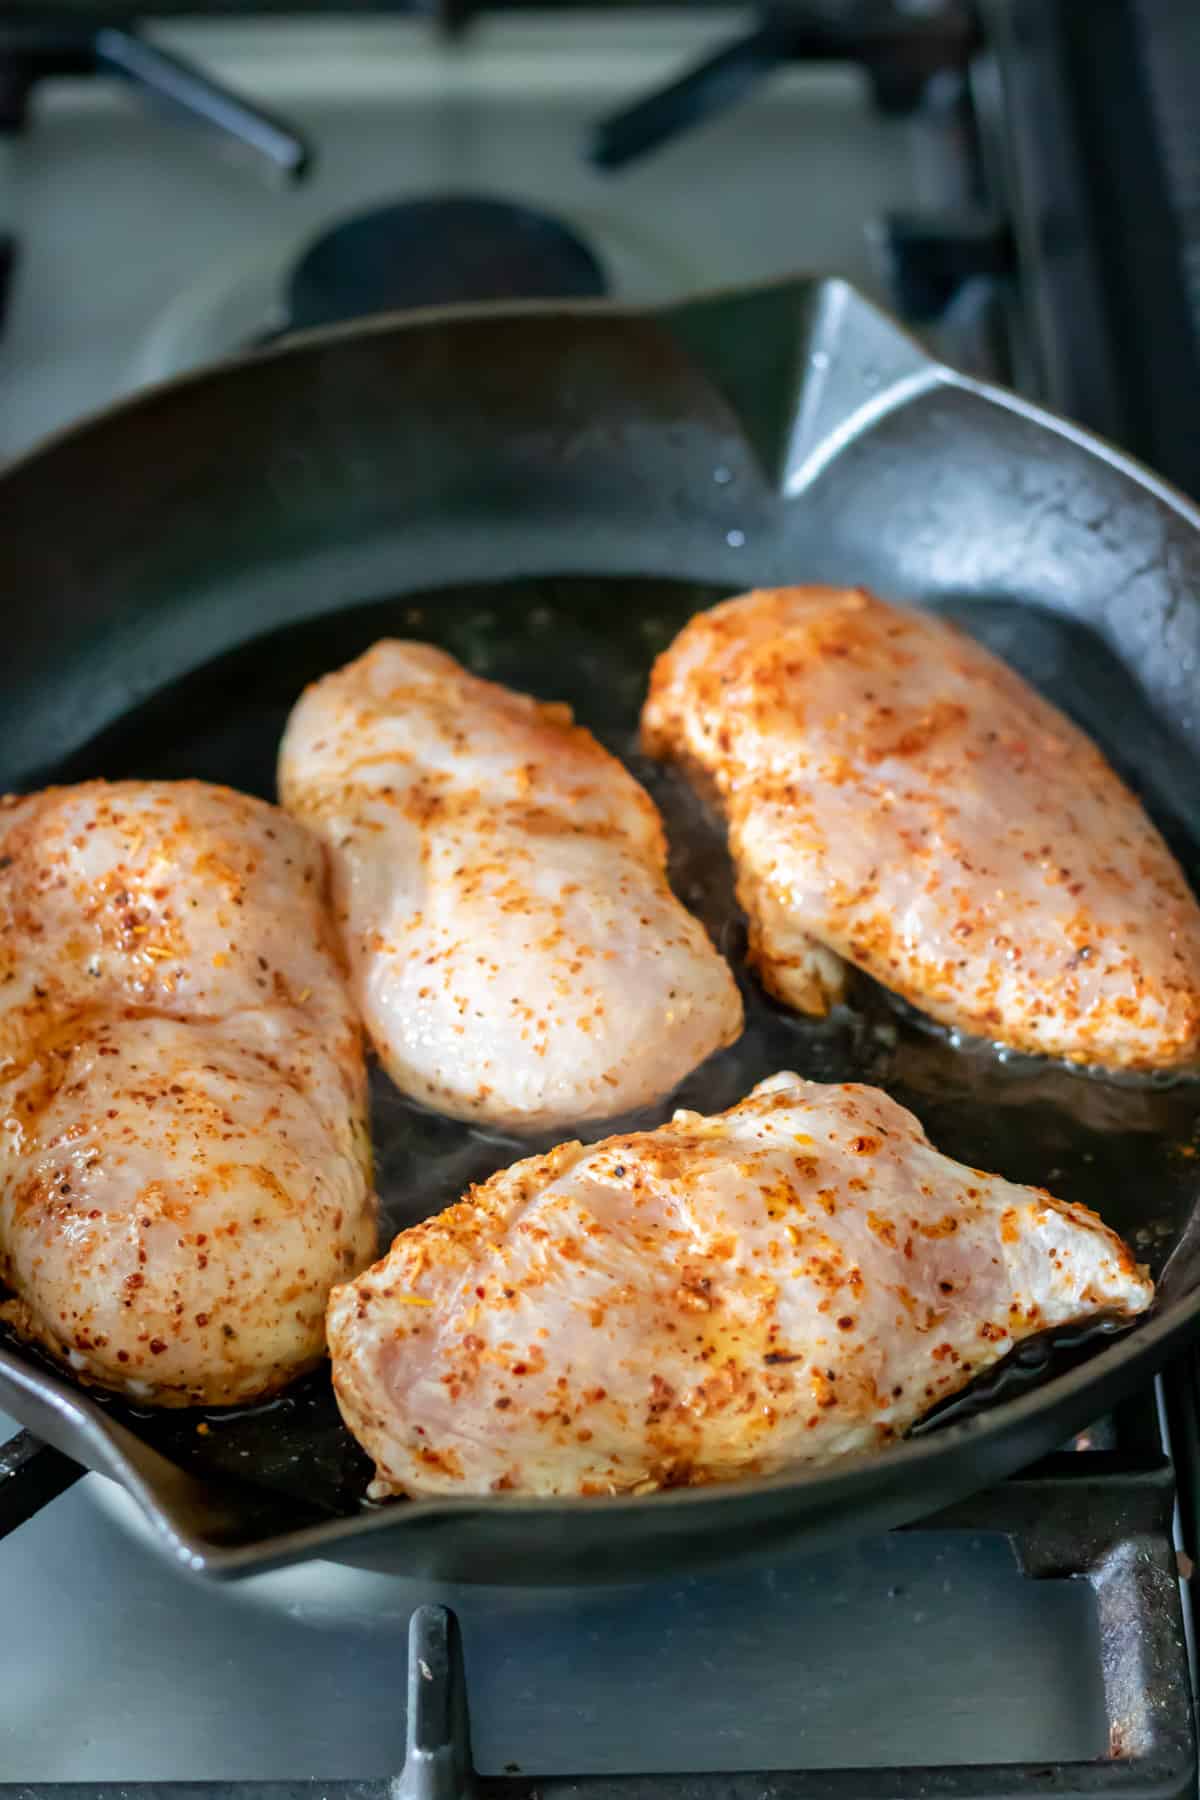 Pan frying chicken breasts.